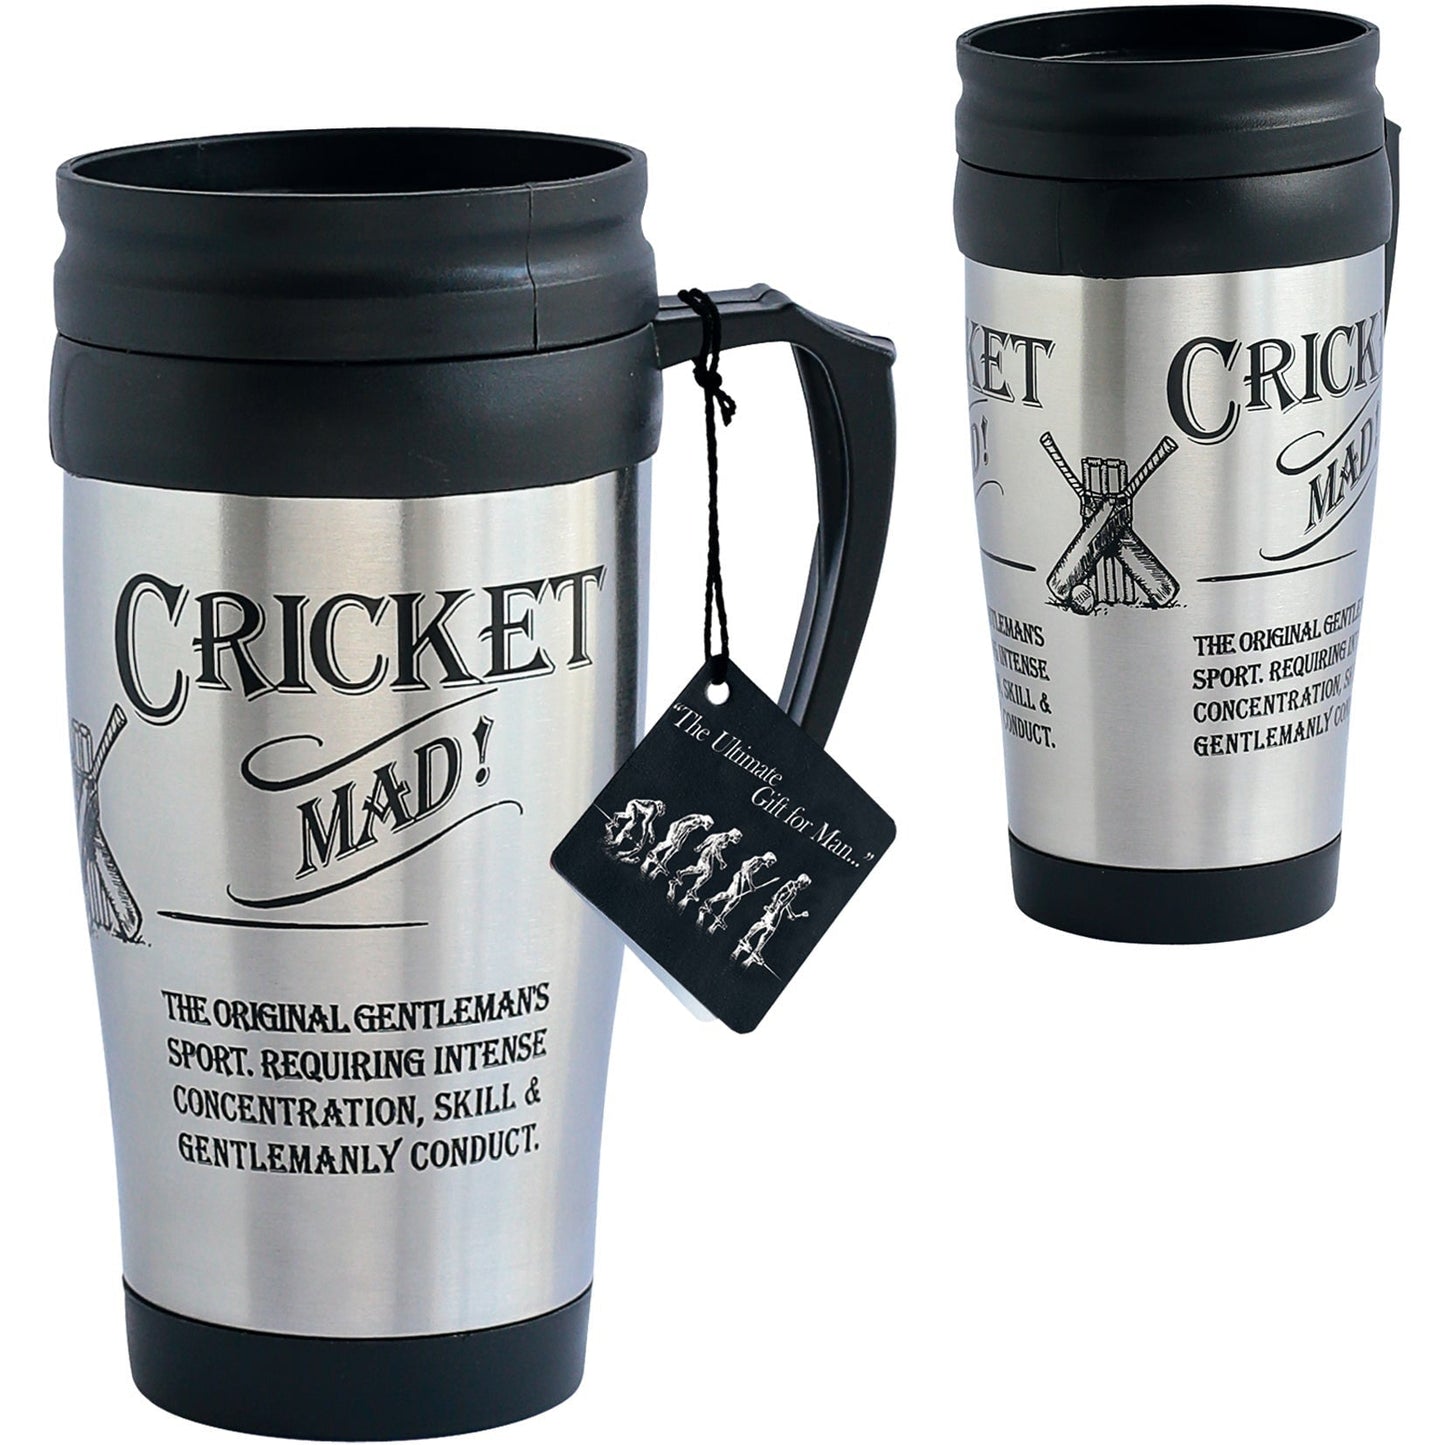 Cricket travel mug